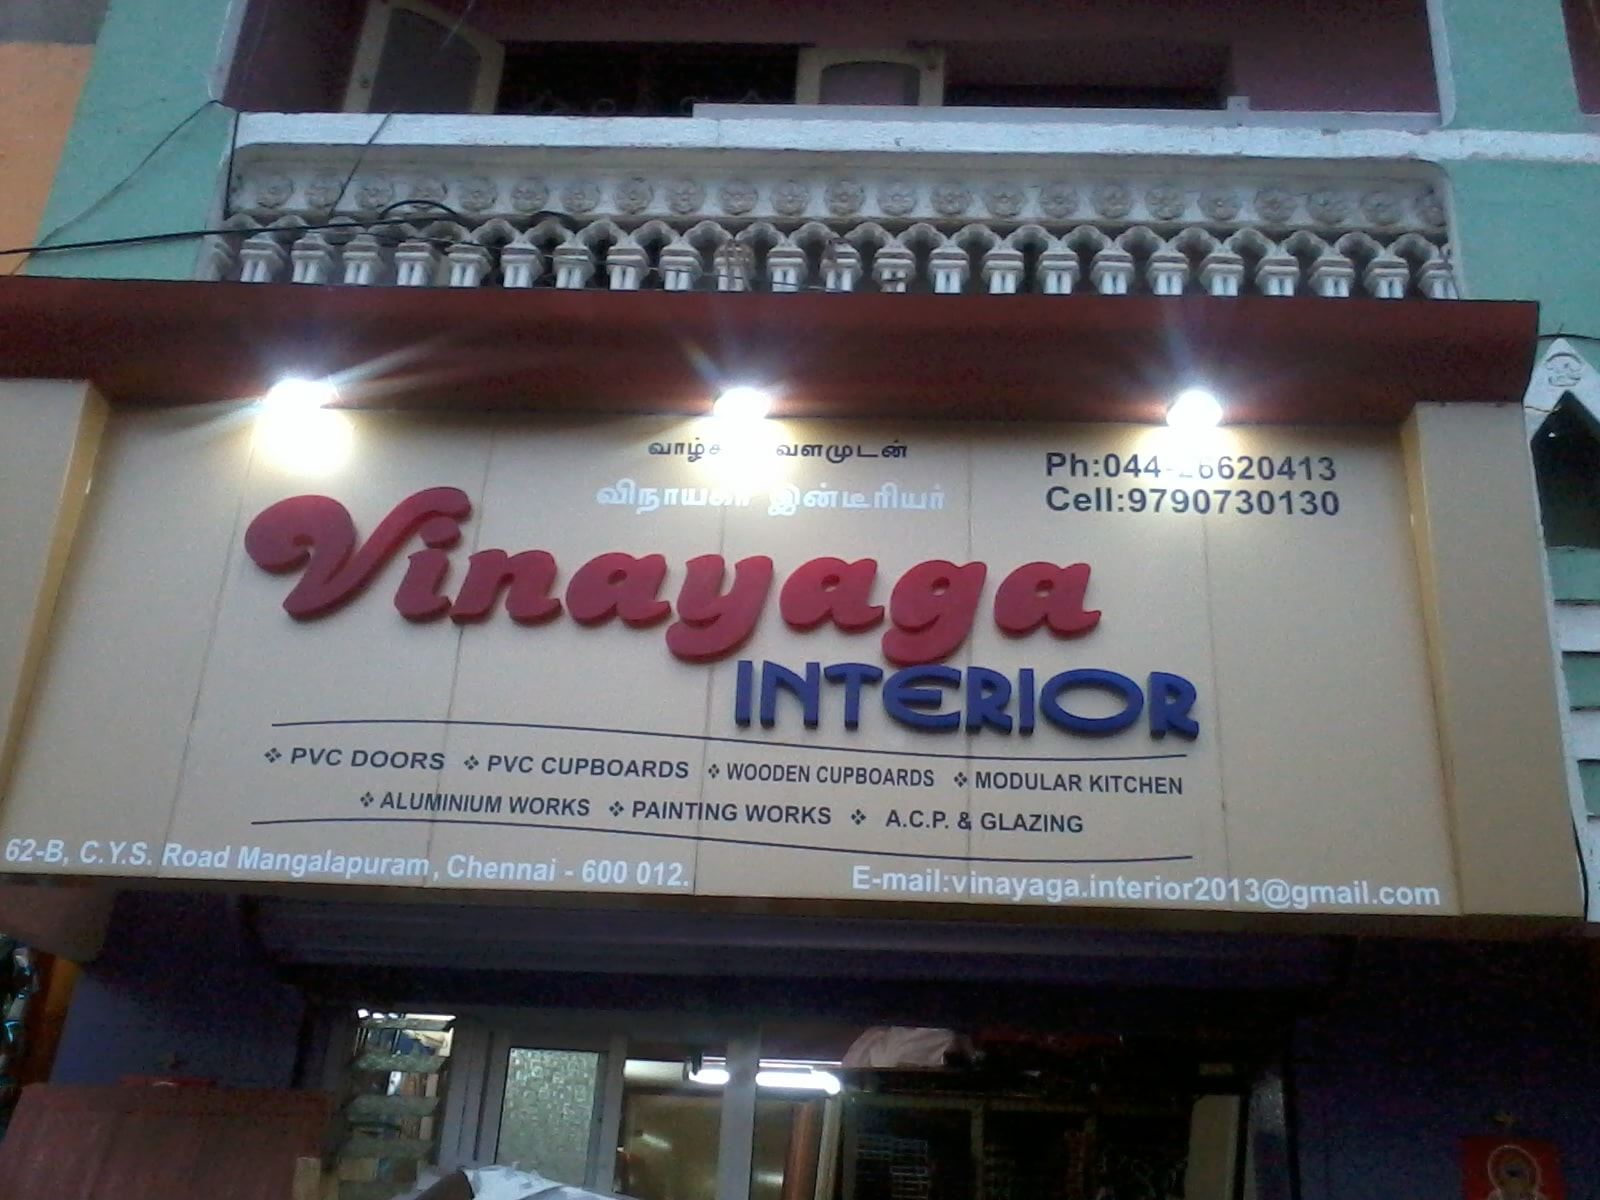 shop name board making companies in chennai